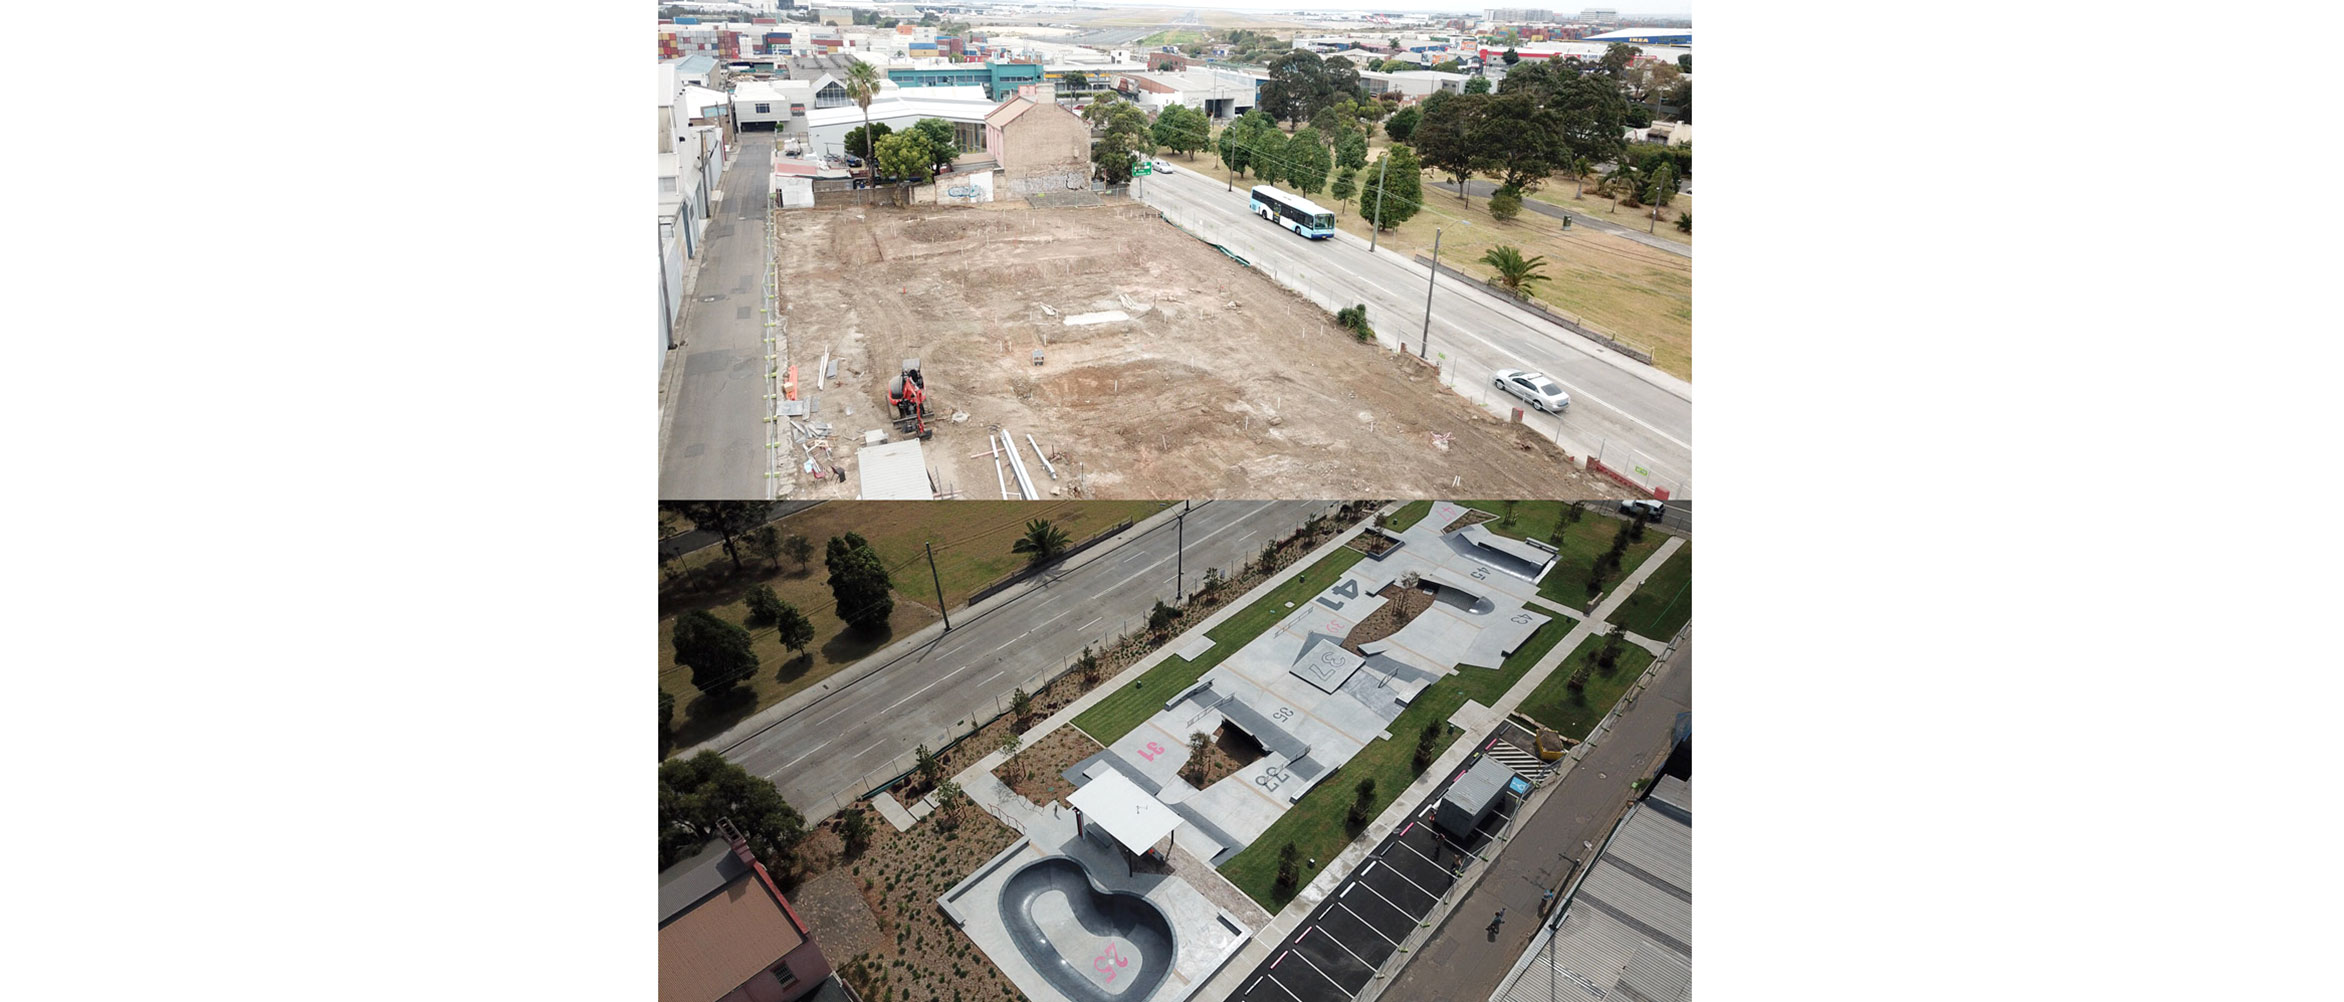 Sydenham skate park before and after